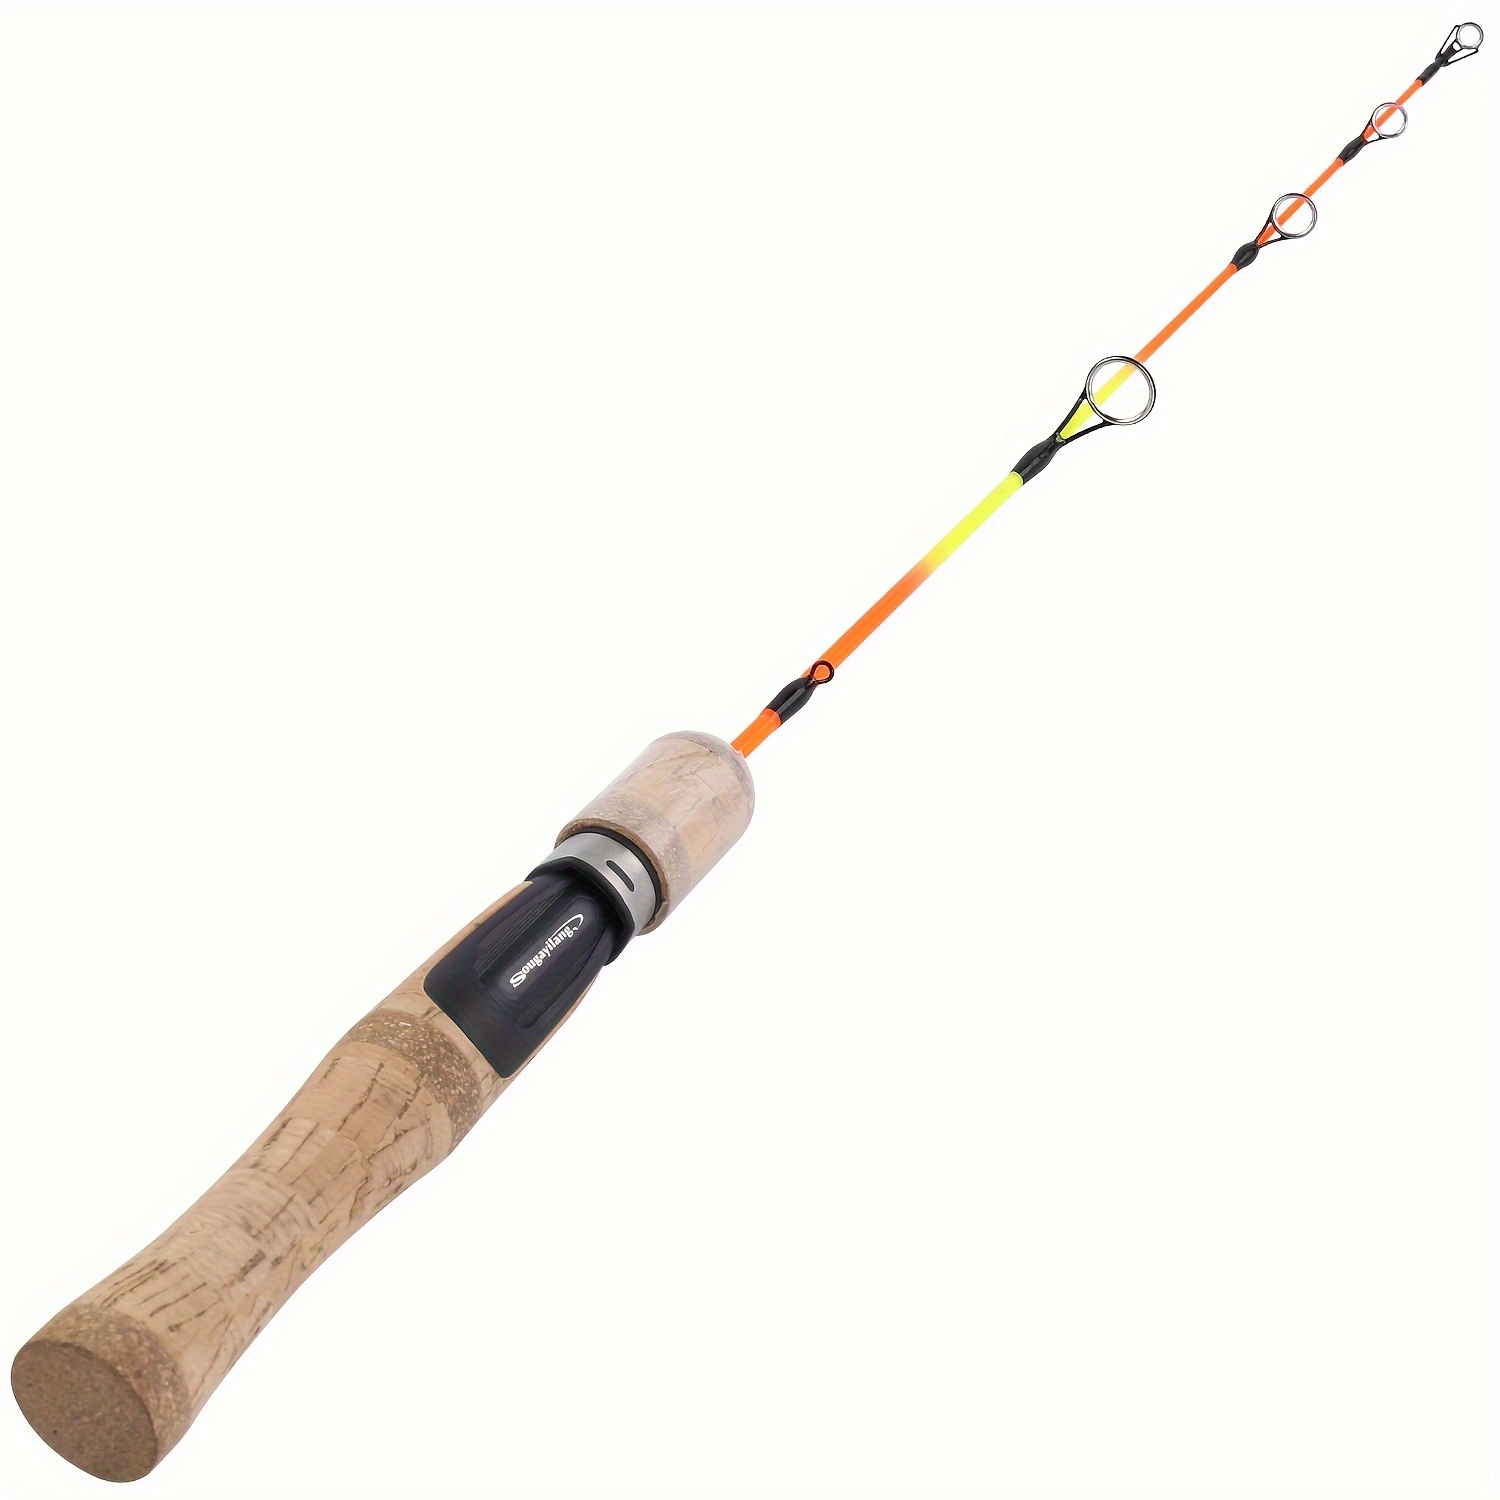 Sougayilang Ice Fishing Rod Portable Spinning Rod Cork - Temu